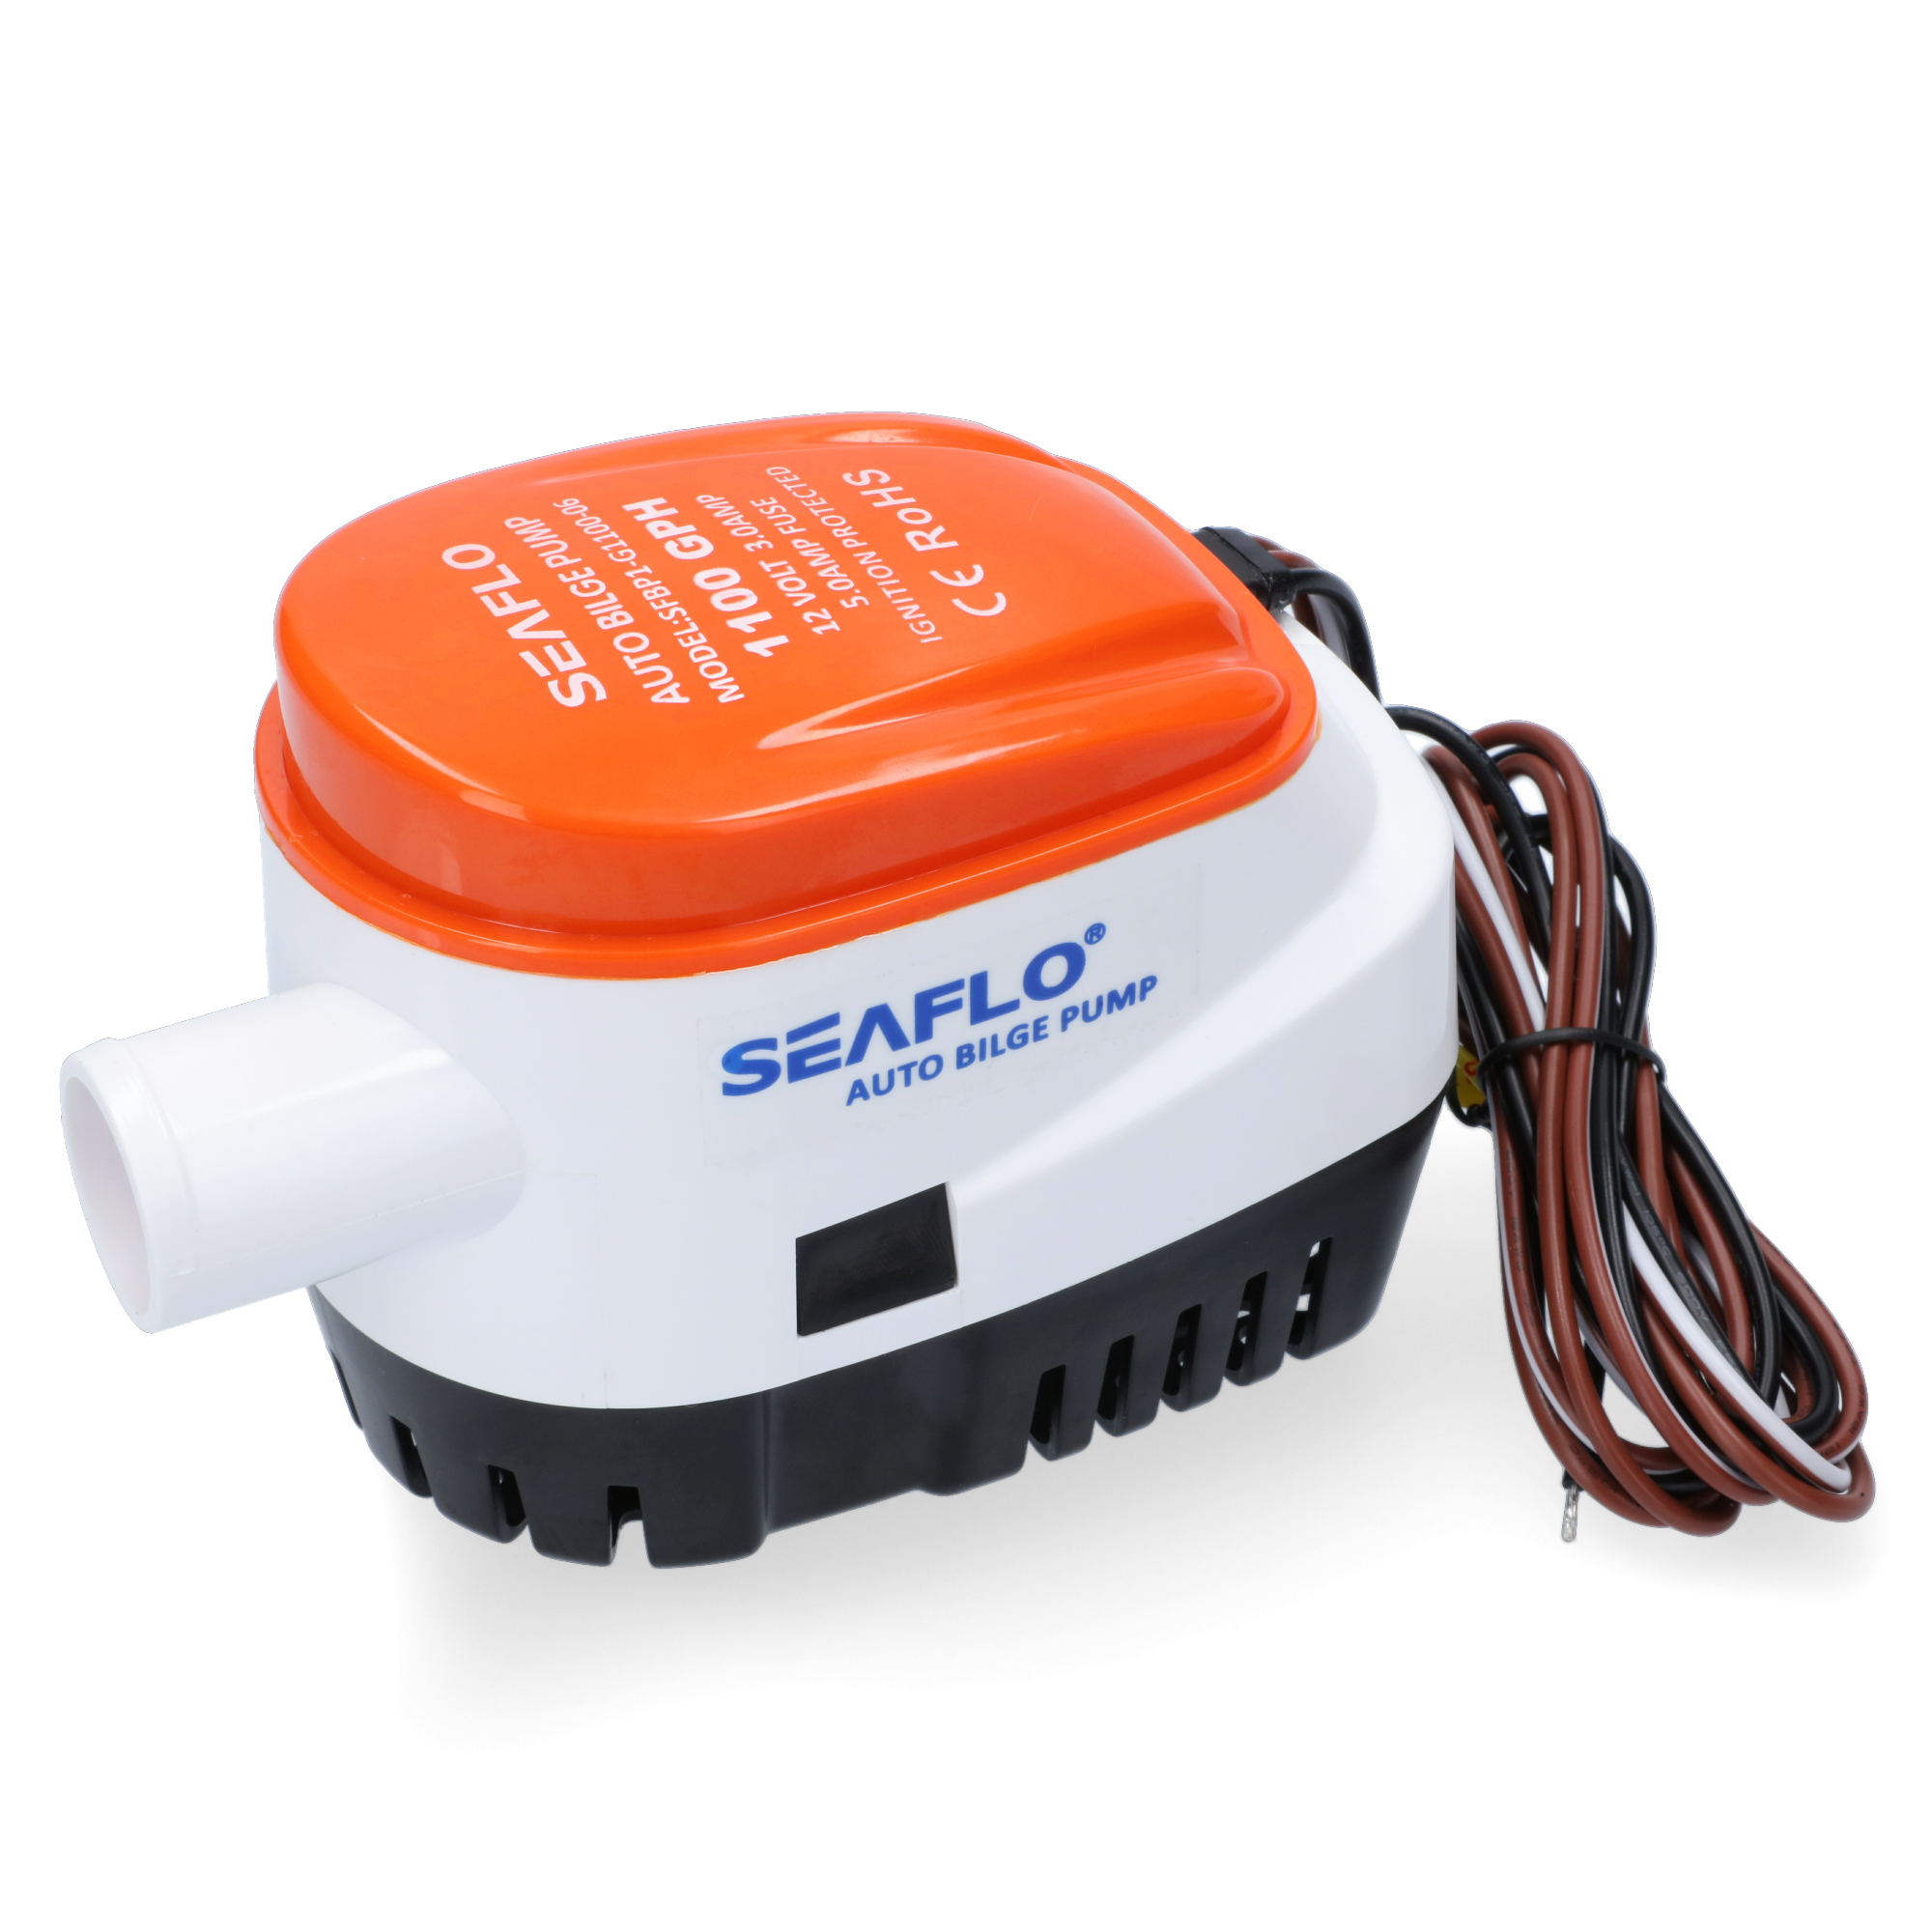 SEAFLO ® Automatik Bilge Pumpe 12V Sahara 1100